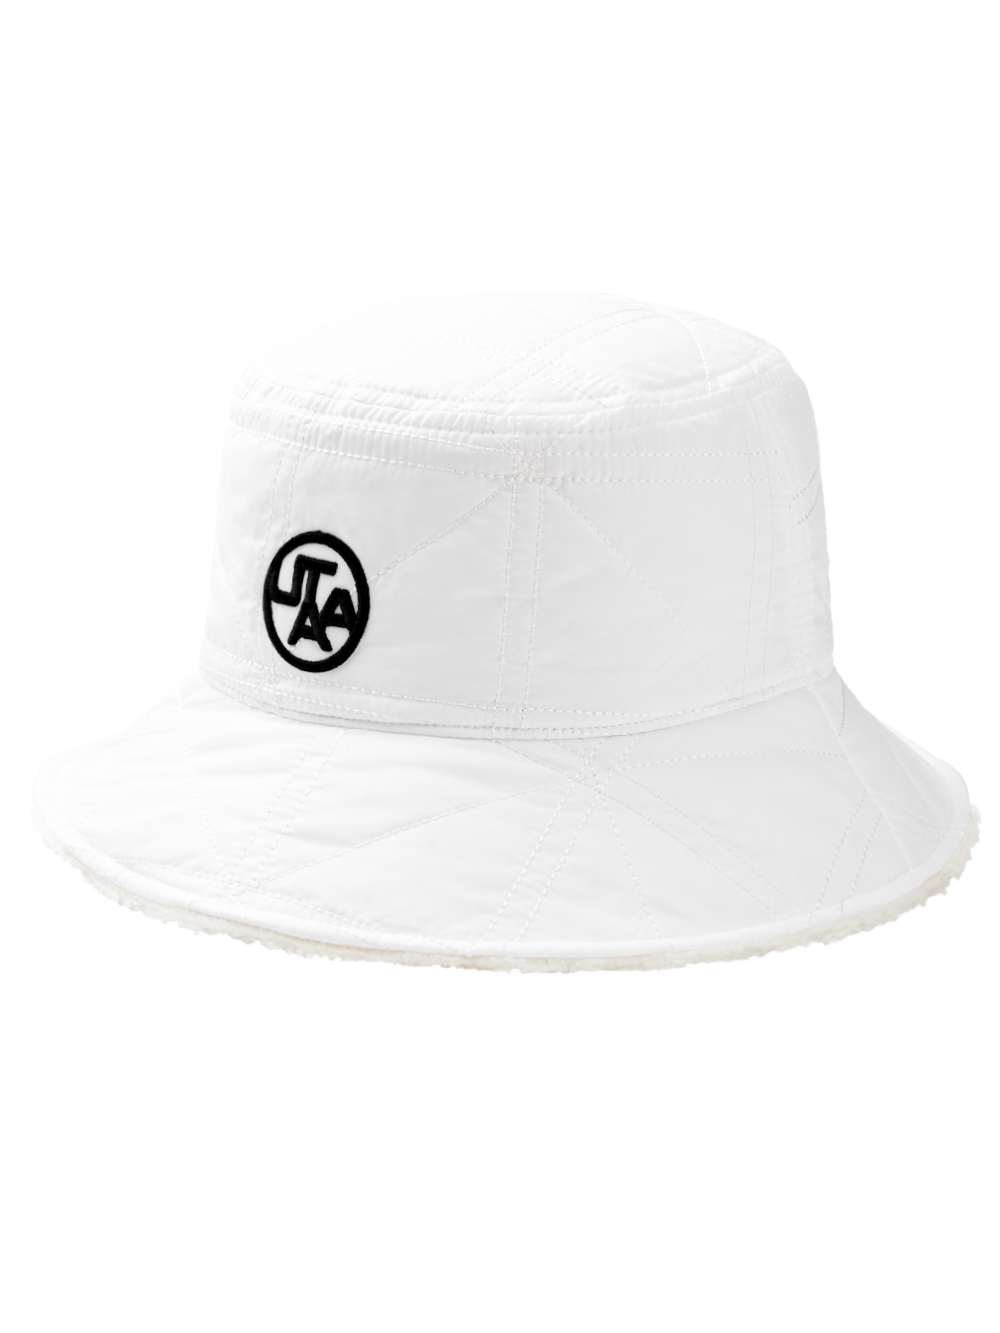 UTAA Quilting Fleece Bucket Hat : White(UD1GCU748WH)